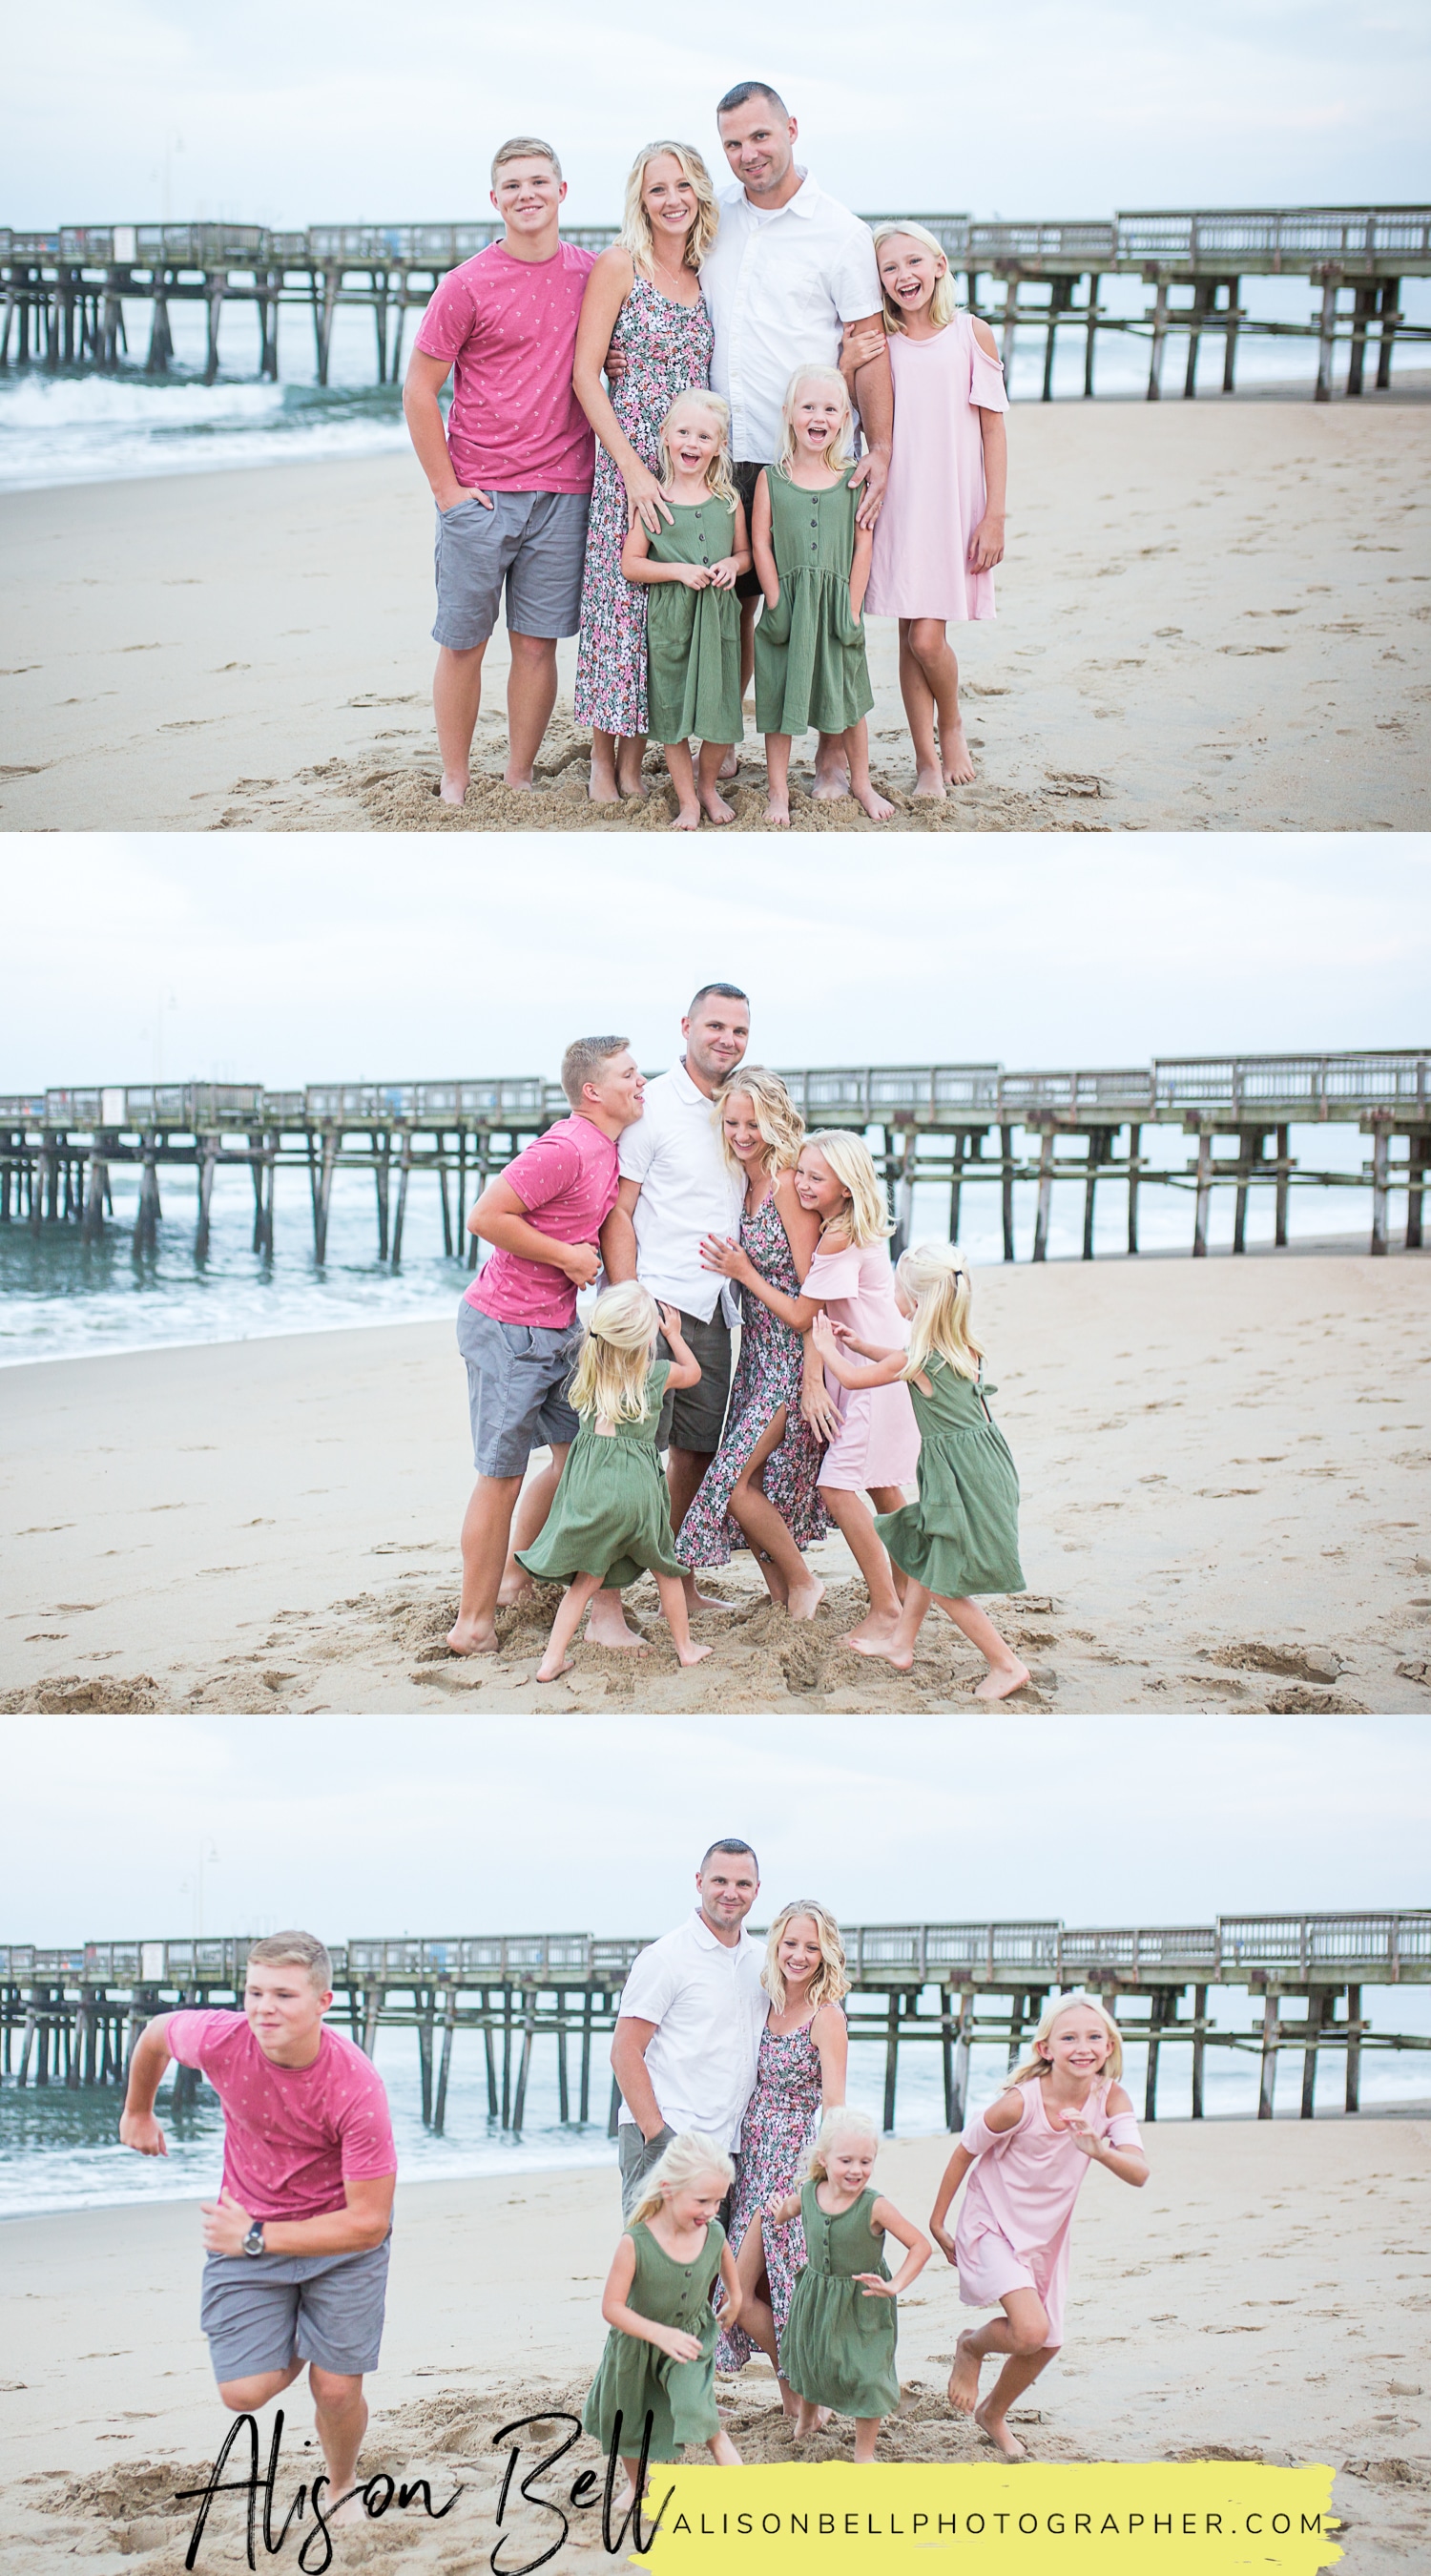 Sandbridge Beach photo session with extended family by alison bell photographer alisonbellphotographer.com 